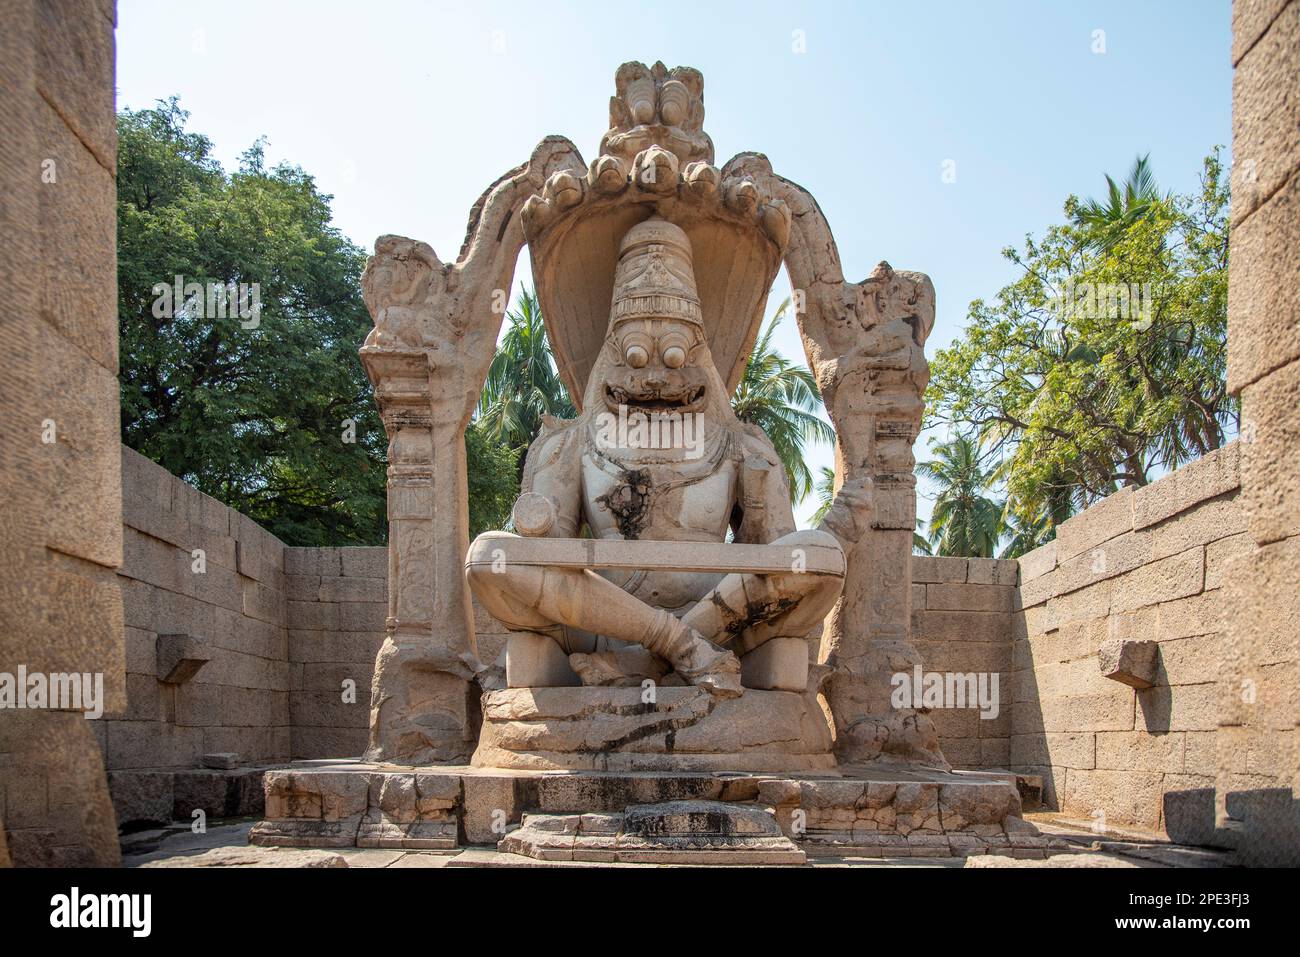 Lakshmi Narasimha ou Temple Ugra Narasimha à Hampi. Hampi, capitale de l'empire de Vijayanagar, est un site classé au patrimoine mondial de l'UNESCO. Banque D'Images